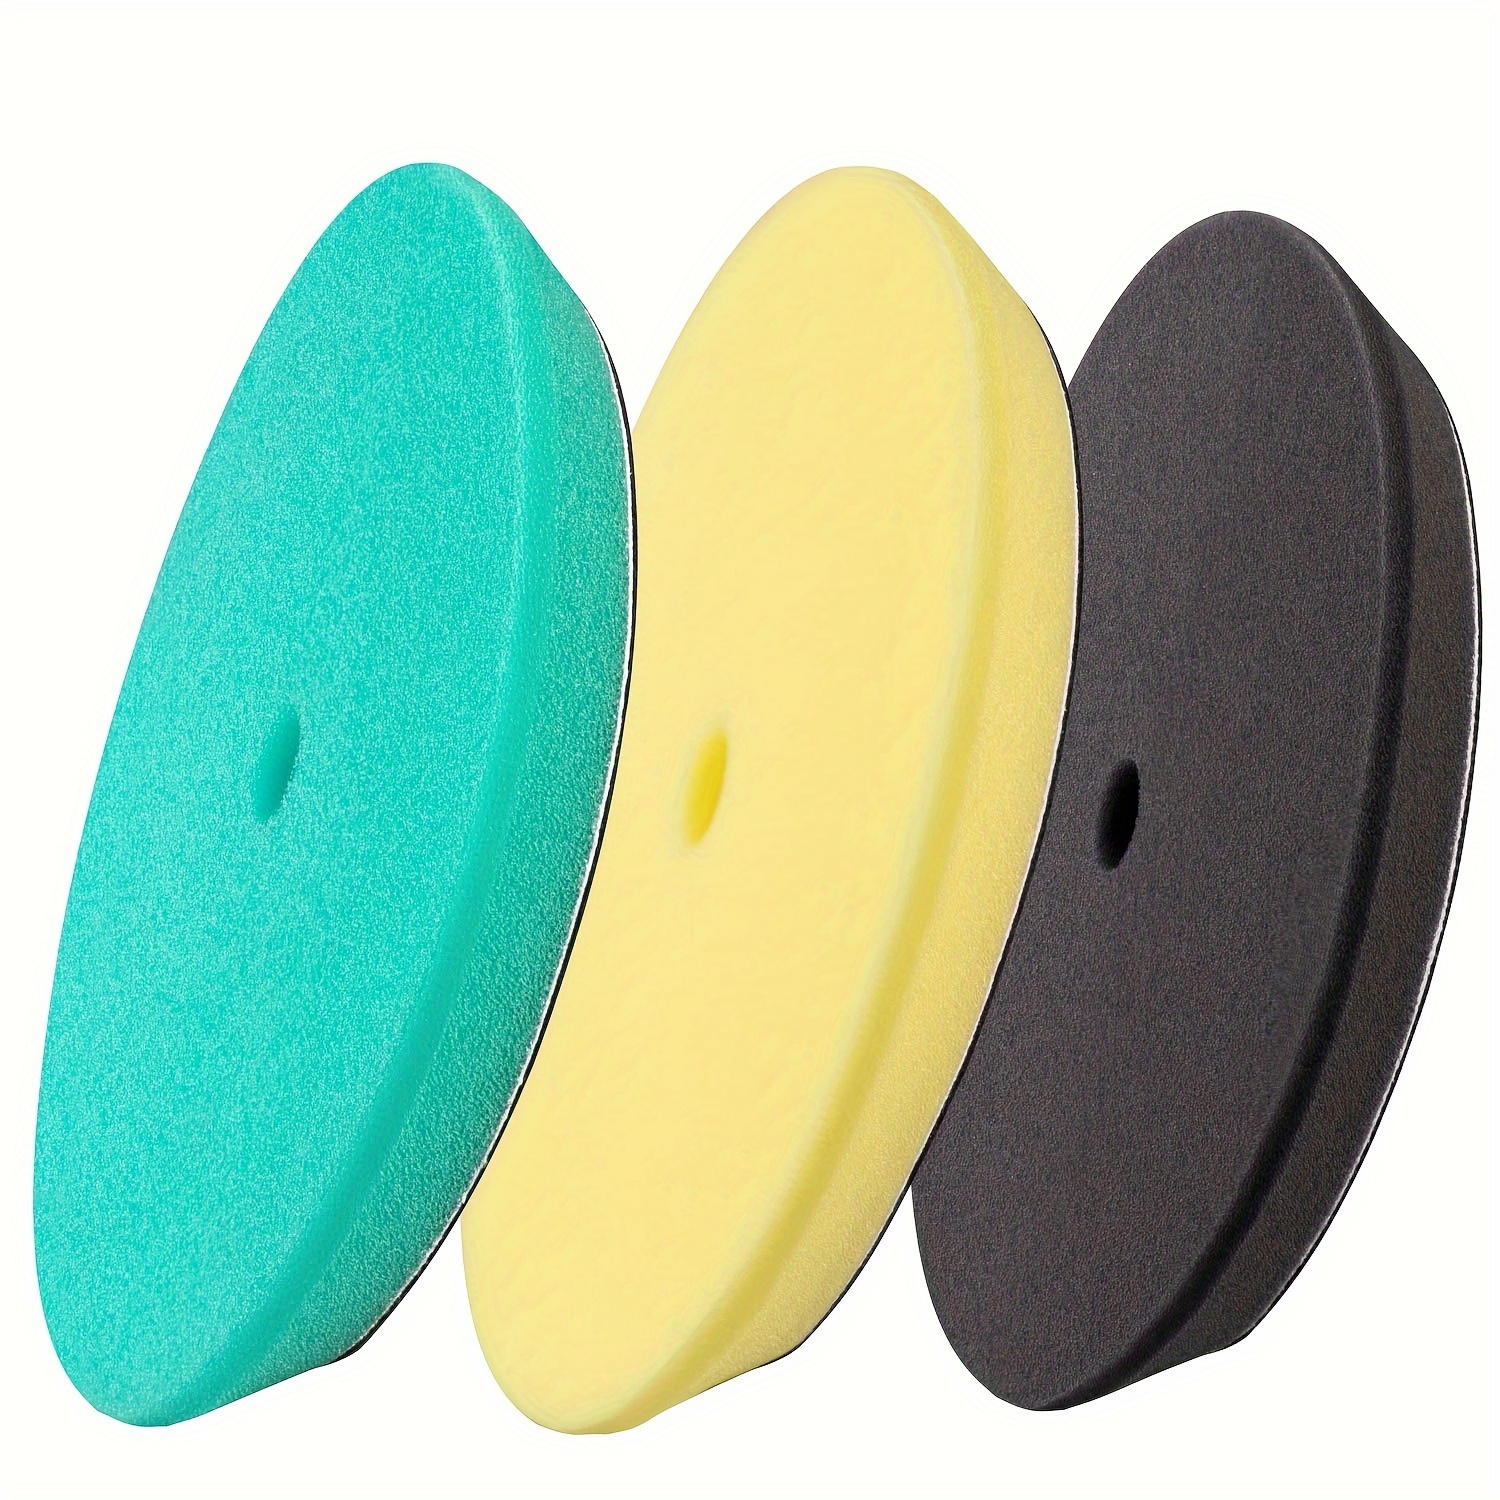 3 inch Buffing Polishing Pad, SPTA Car Handle Foam Applicator Pads,5pcs 3 inch Grip Applicator Foam Pads & Microfiber Pad Kit, Detailing Buffing